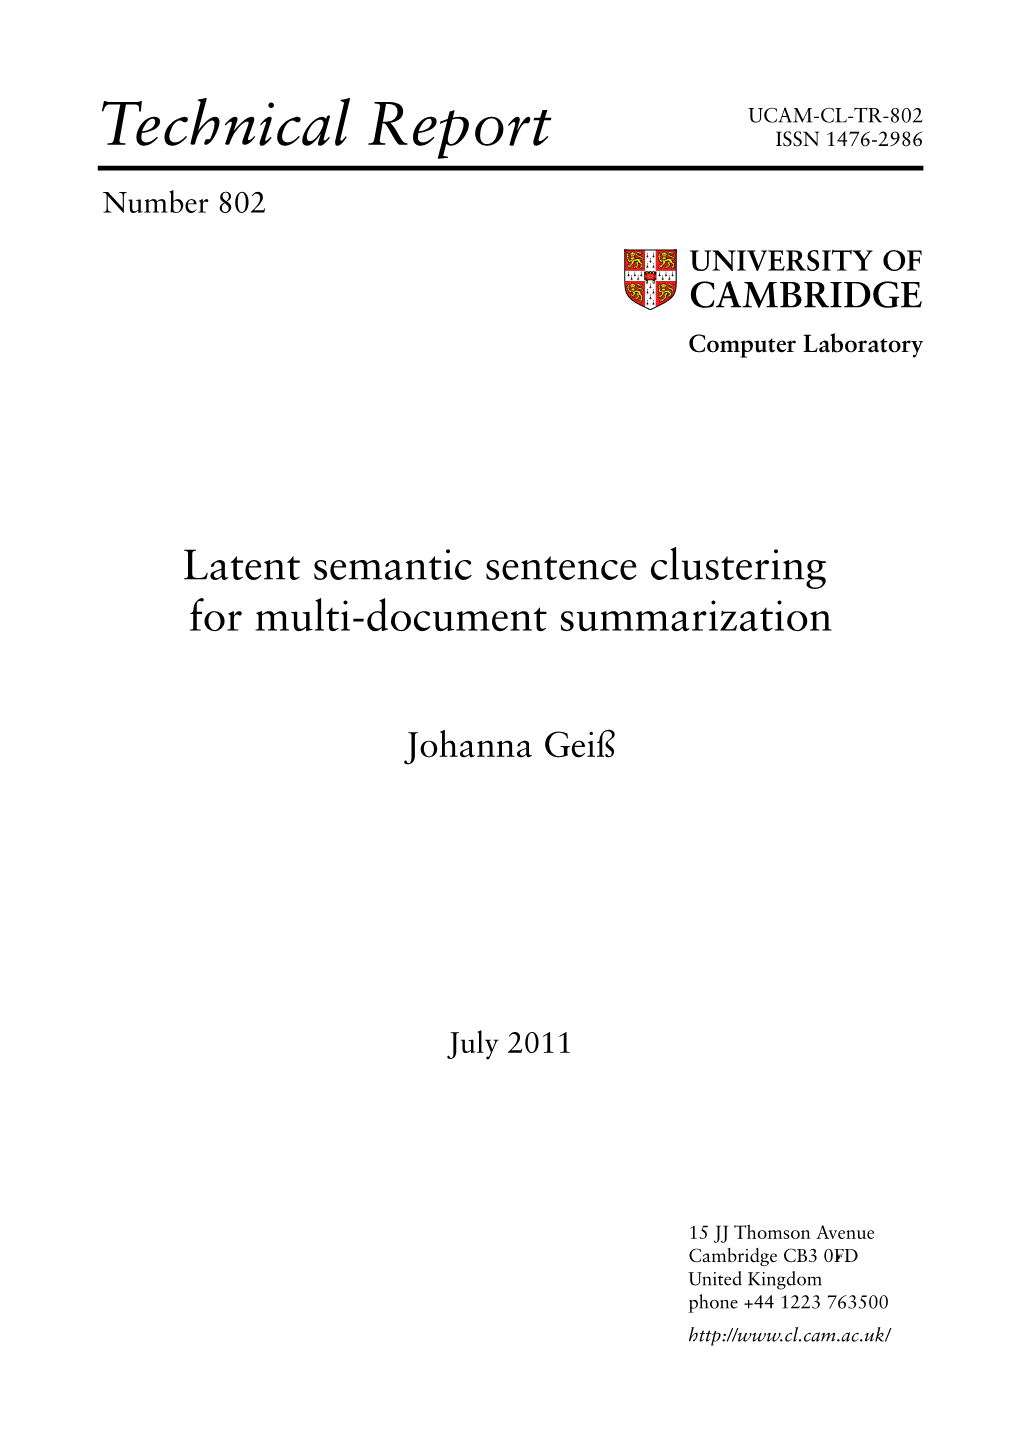 Latent Semantic Sentence Clustering for Multi-Document Summarization